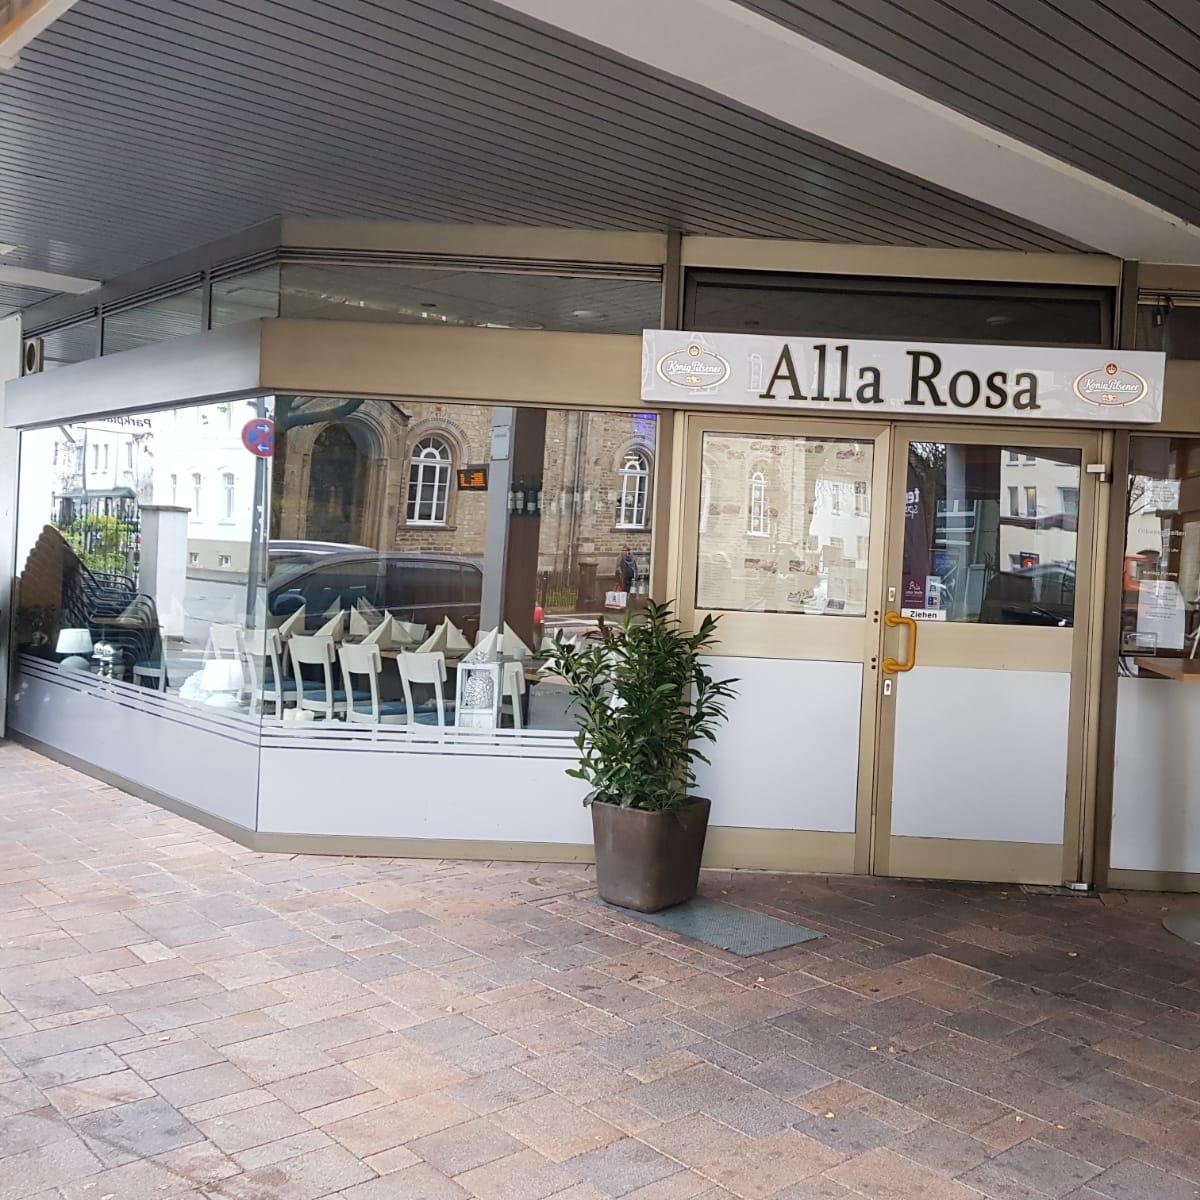 Restaurant "Trattoria Alla-Rosa – Bei Rocco" in  Osnabrück